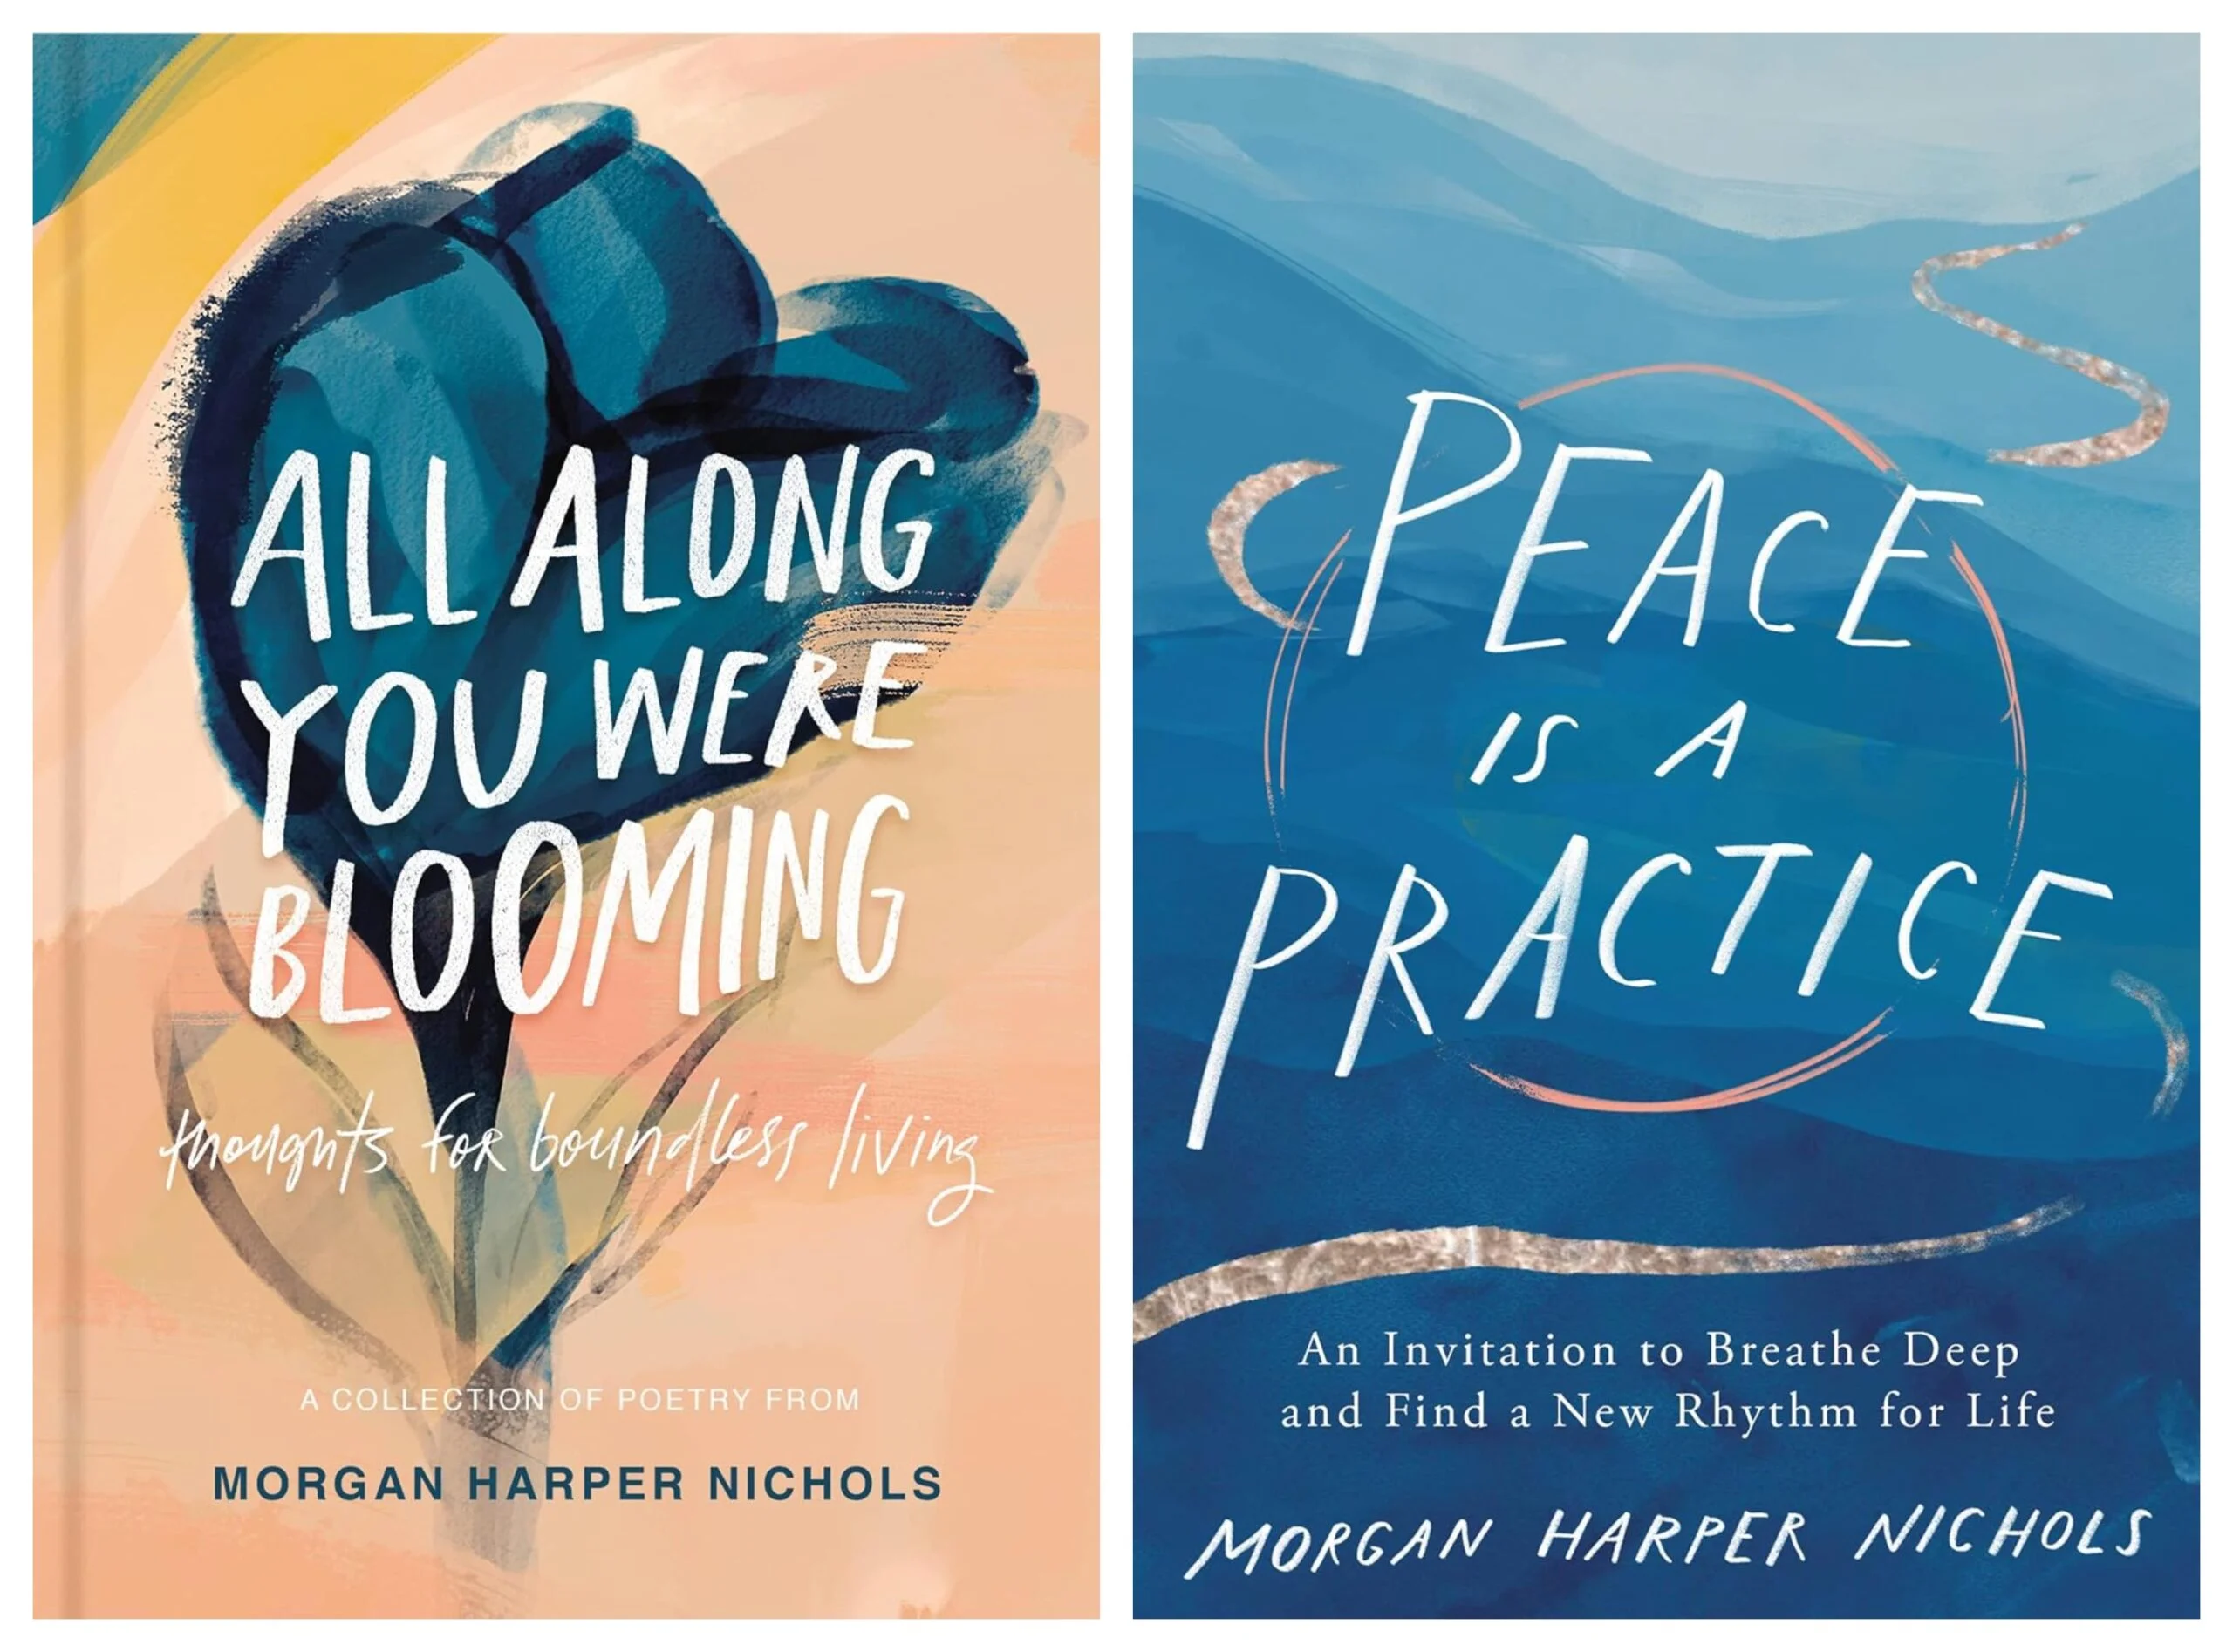 Morgan Harper Nichols Quotes scaled